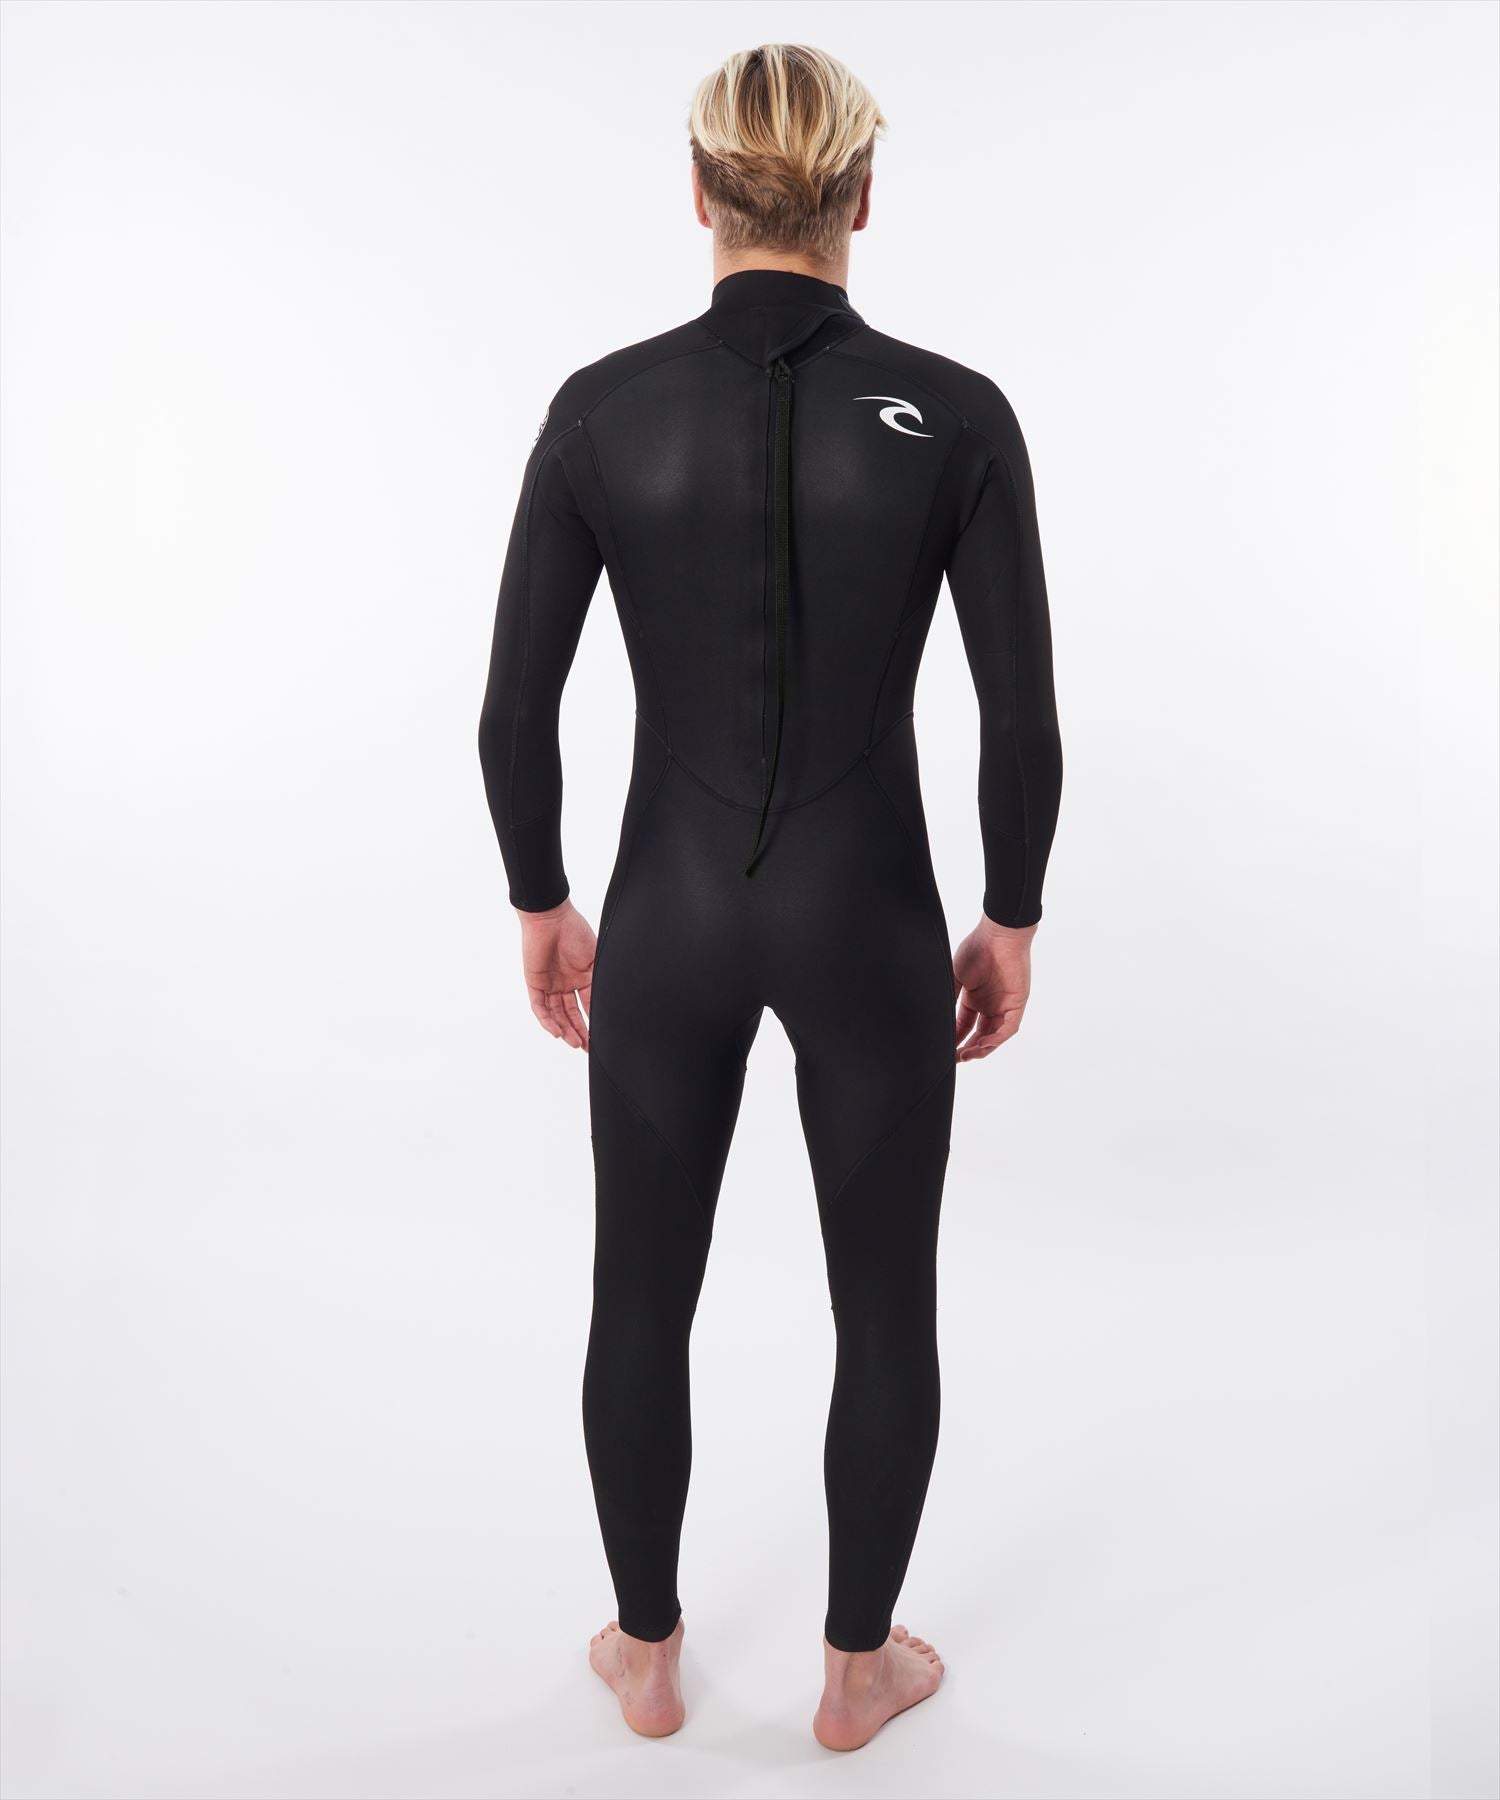 [SALE] [Spring/Autumn] Men's FREELITE 5/3mm Back Zip Full Suit Wetsuit